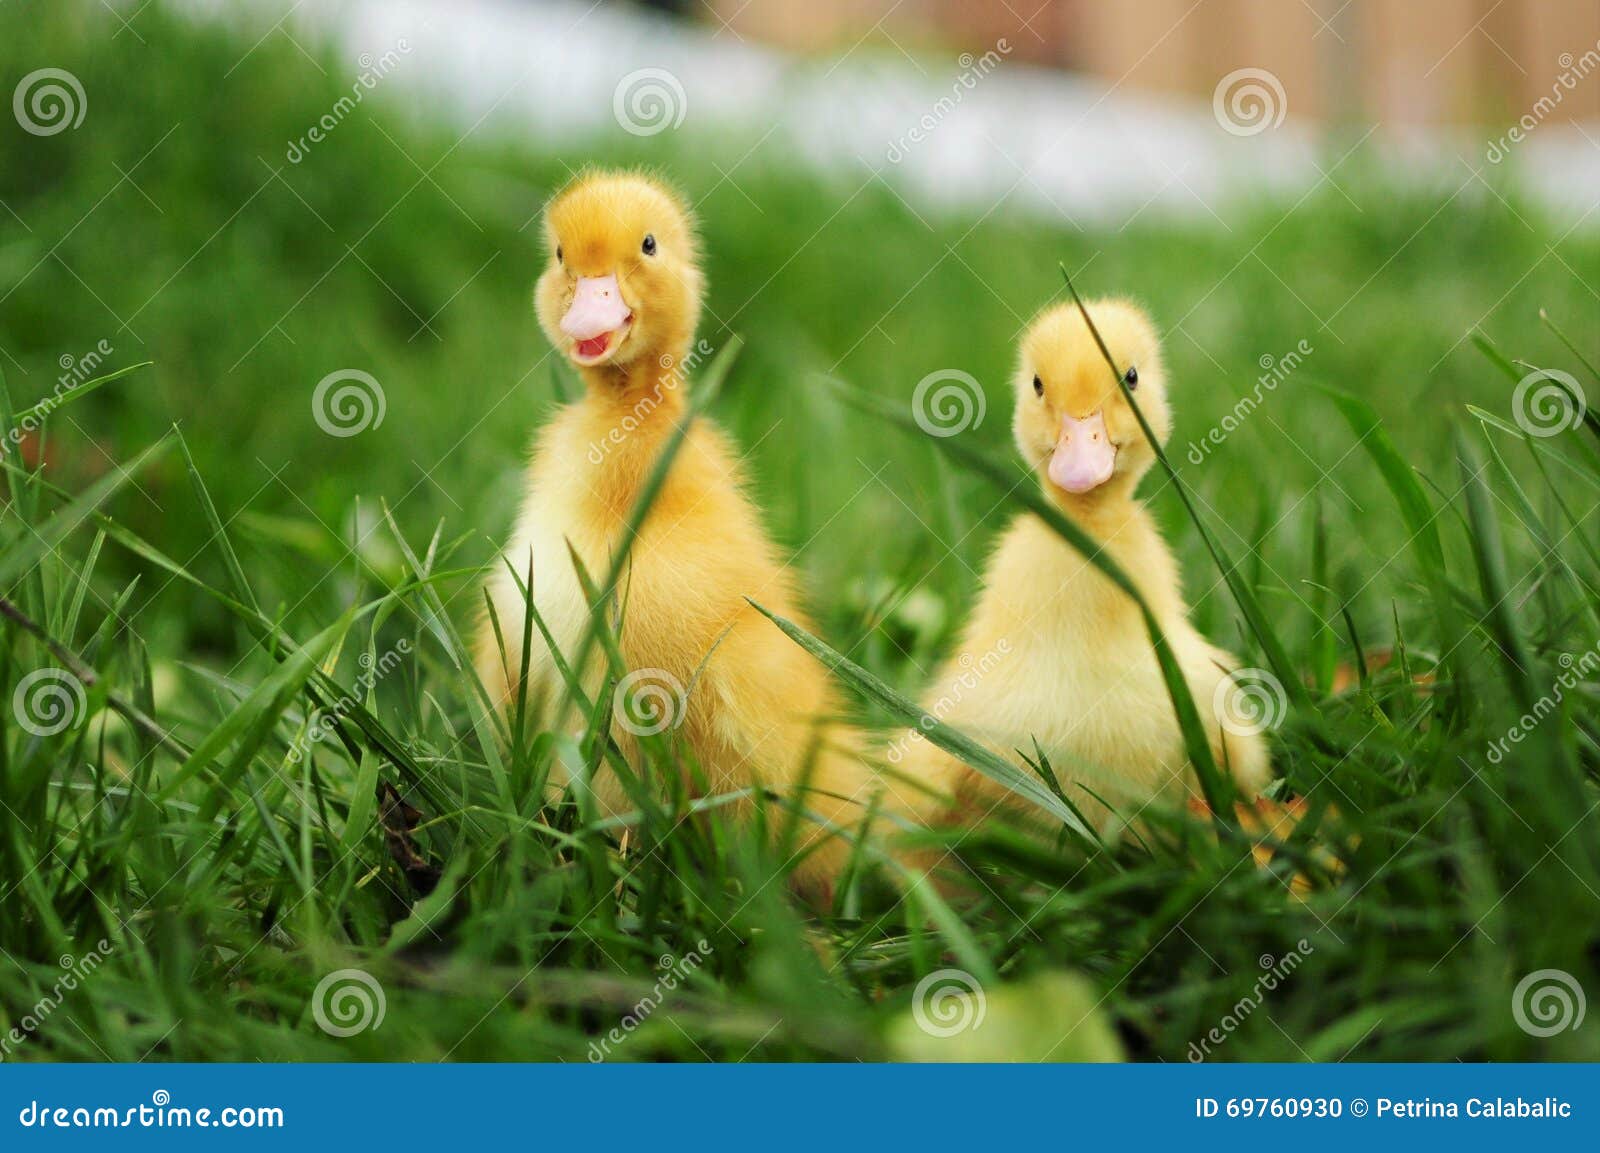 baby ducks in spring grass